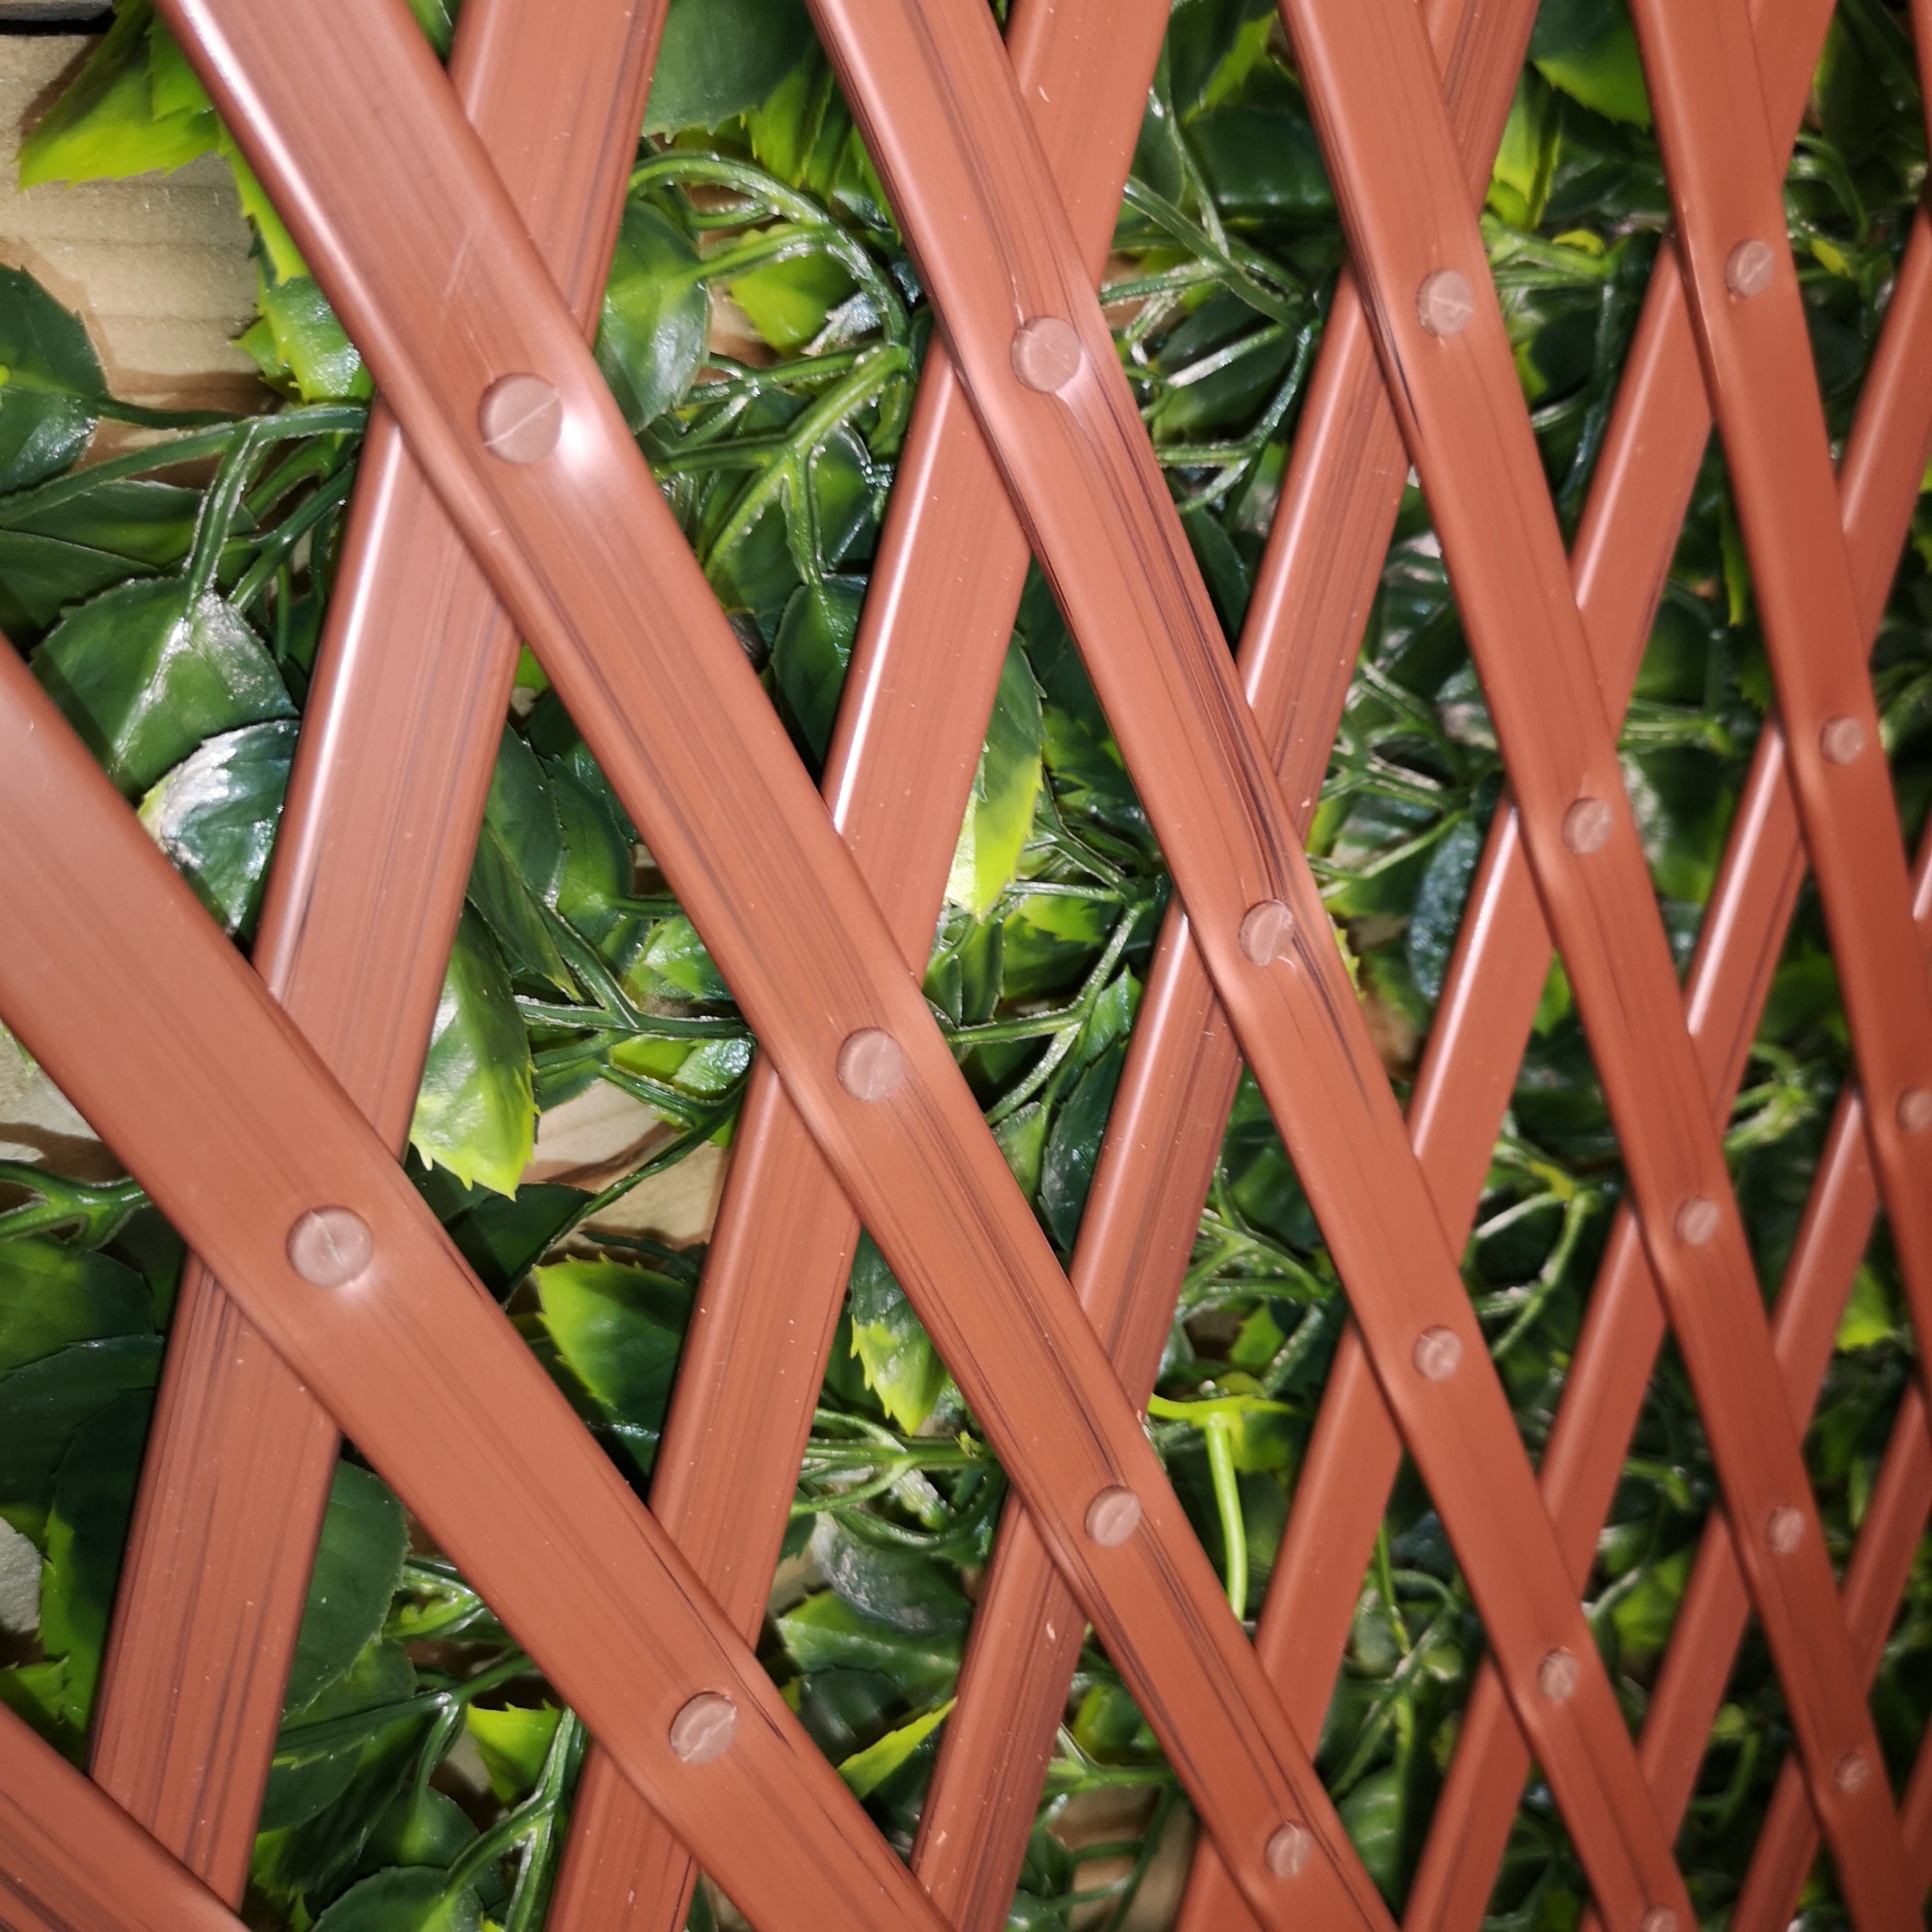 100cm x 200cm PE Backed Artificial Fence Garden Trellis Privacy Screening Indoor Outdoor Wall Panel - Beech Leaf